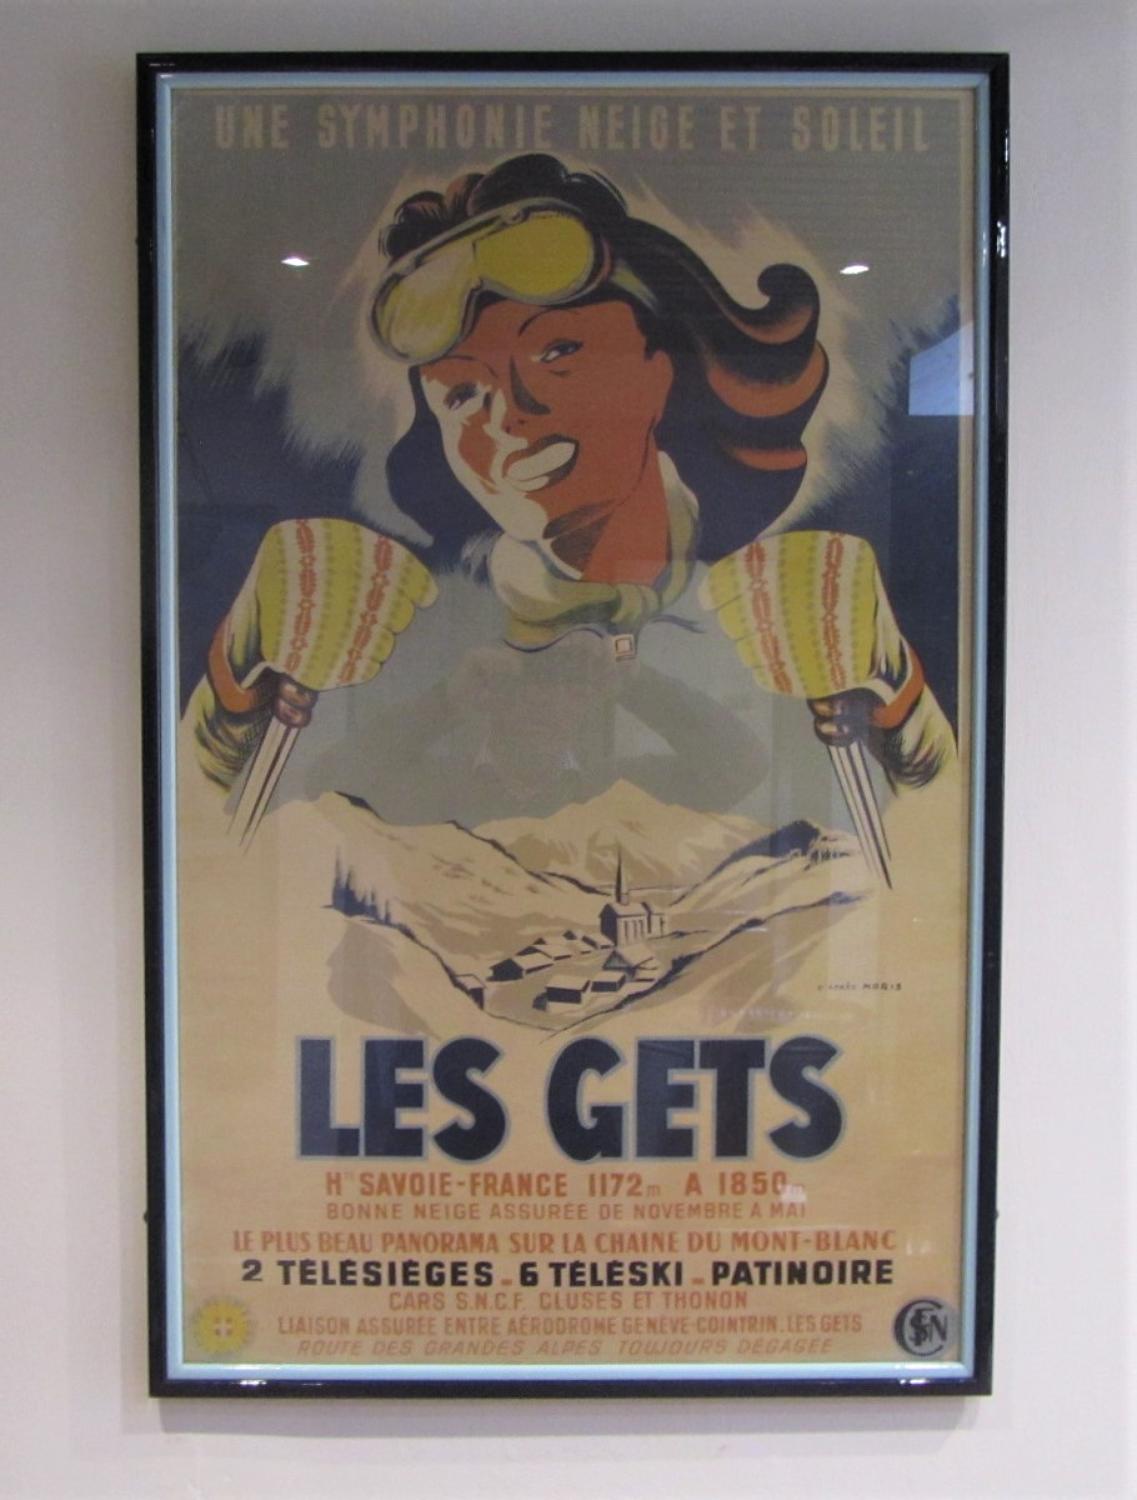 A 1950's Ski poster